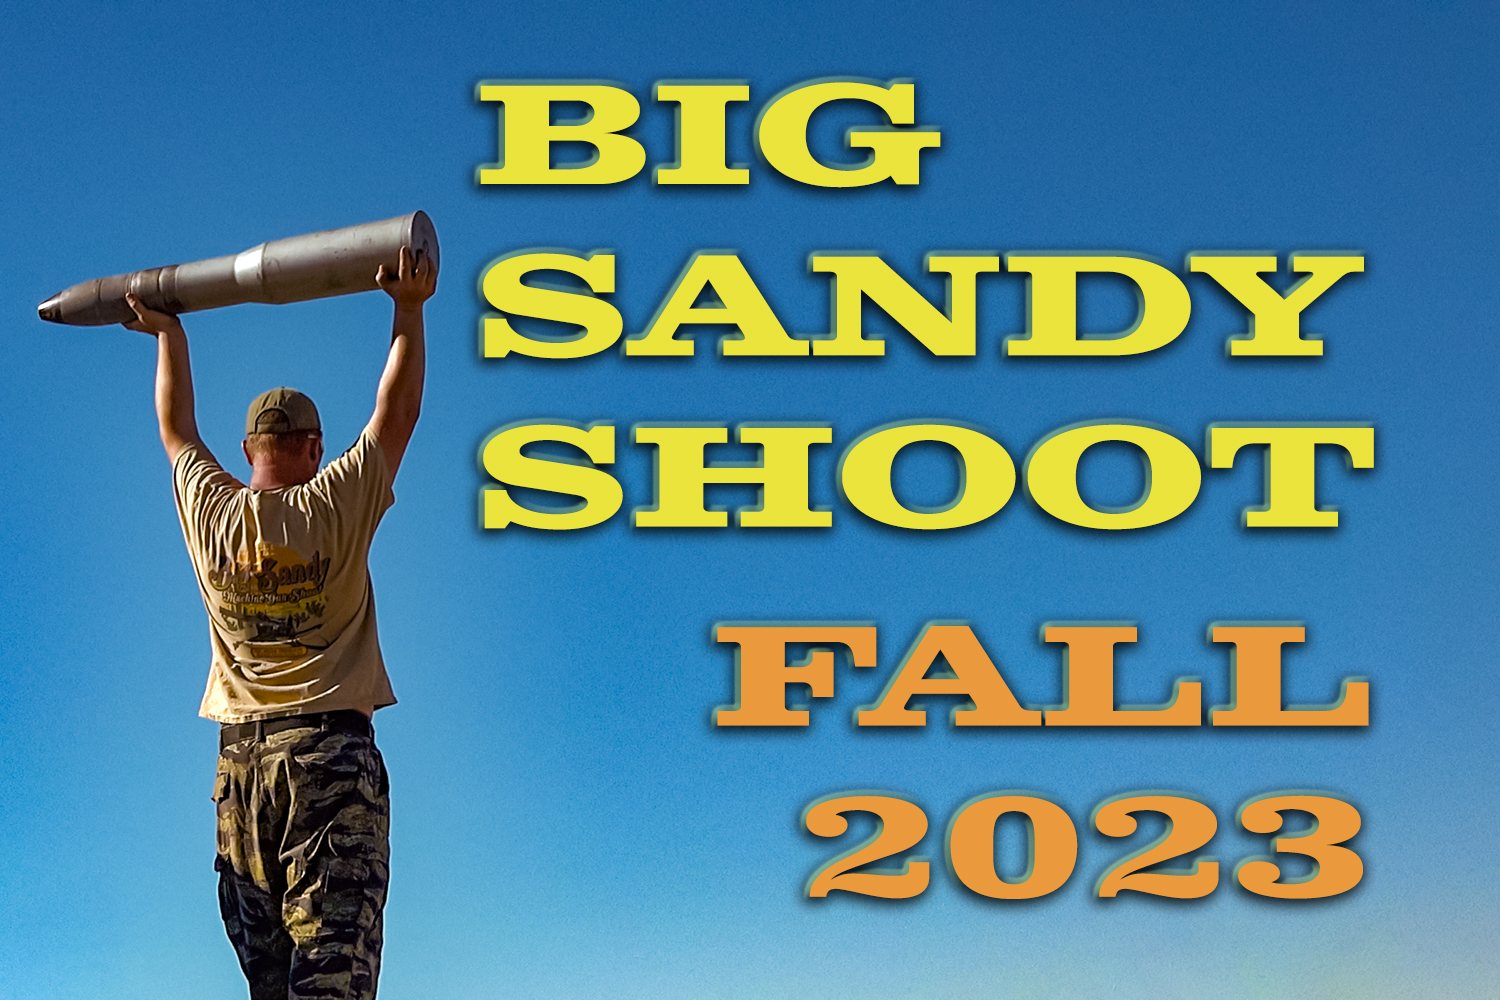 Big Sandy Shoot - Fall 2023